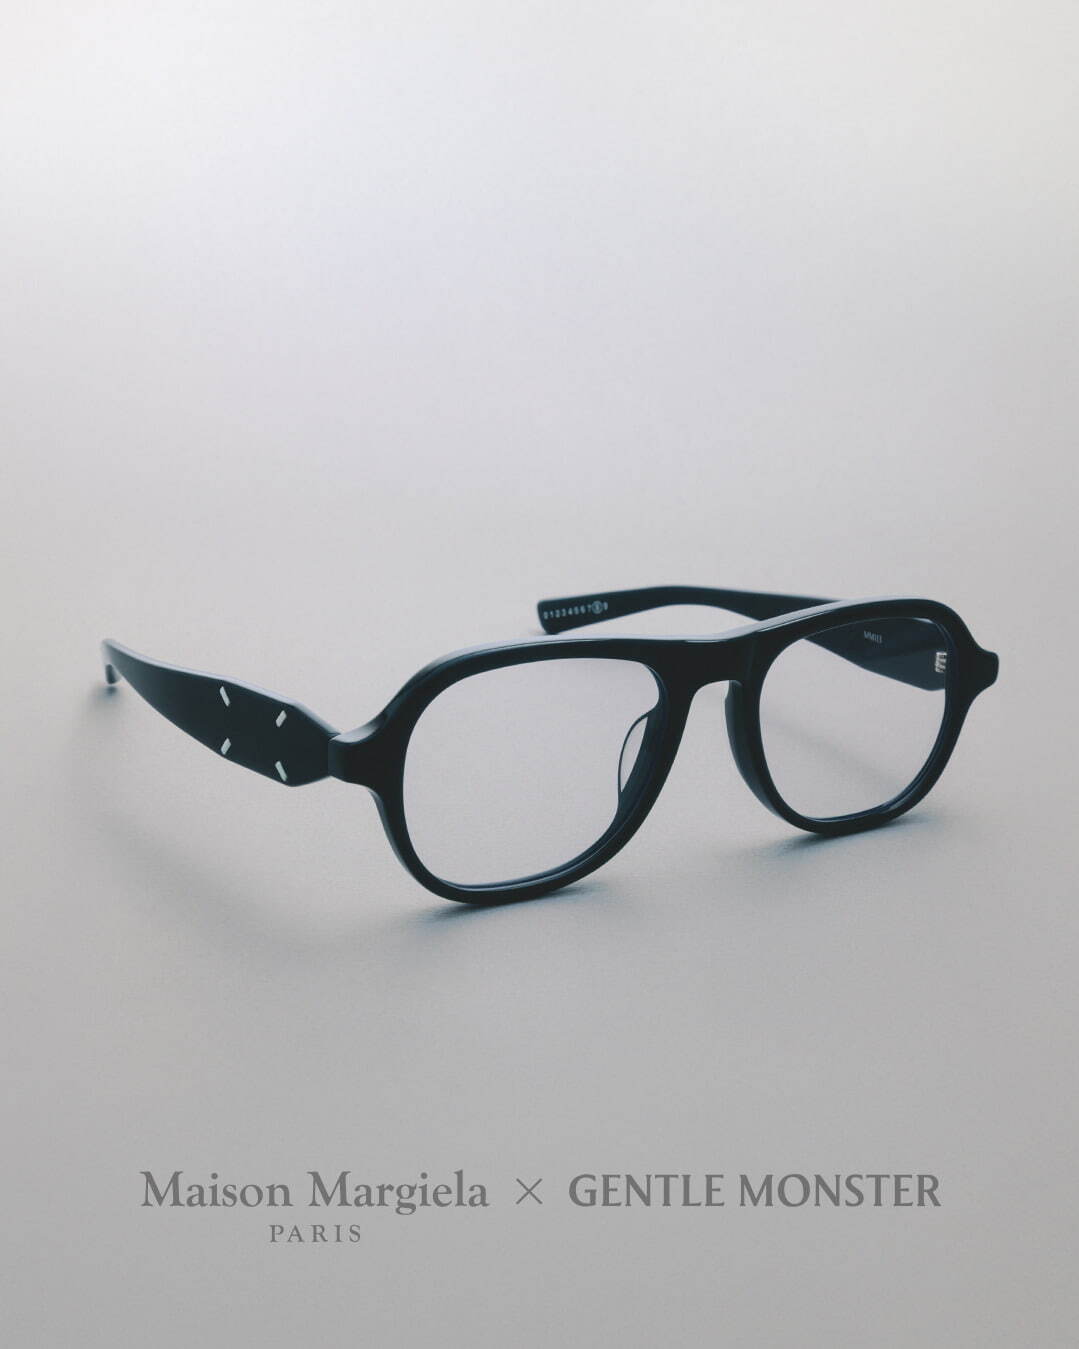 Maison Margiela x Gentle Monster Sunglasses